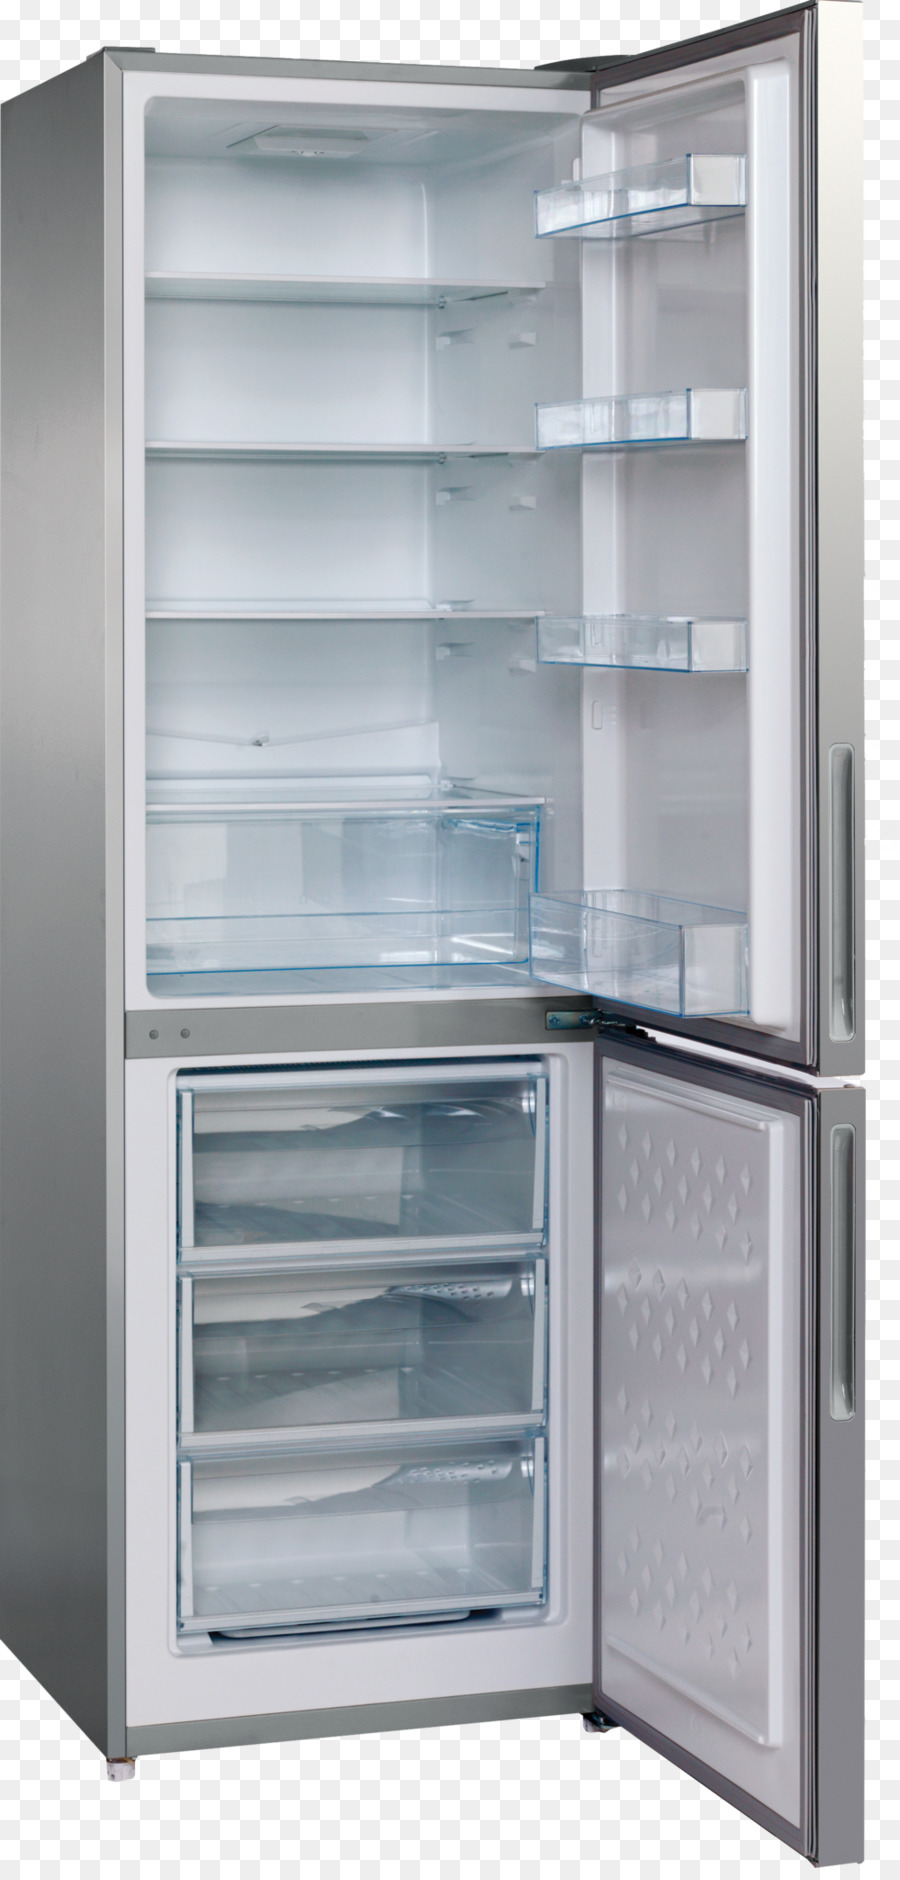 Electrolux En3487aoo ตู้เย็นเ้าตู้เย็นไว้หมวดฟรอสอิสระ 23978litres สีน้ำตาล，Whirlpool Bsnf 8152 มแวนรูป PNG